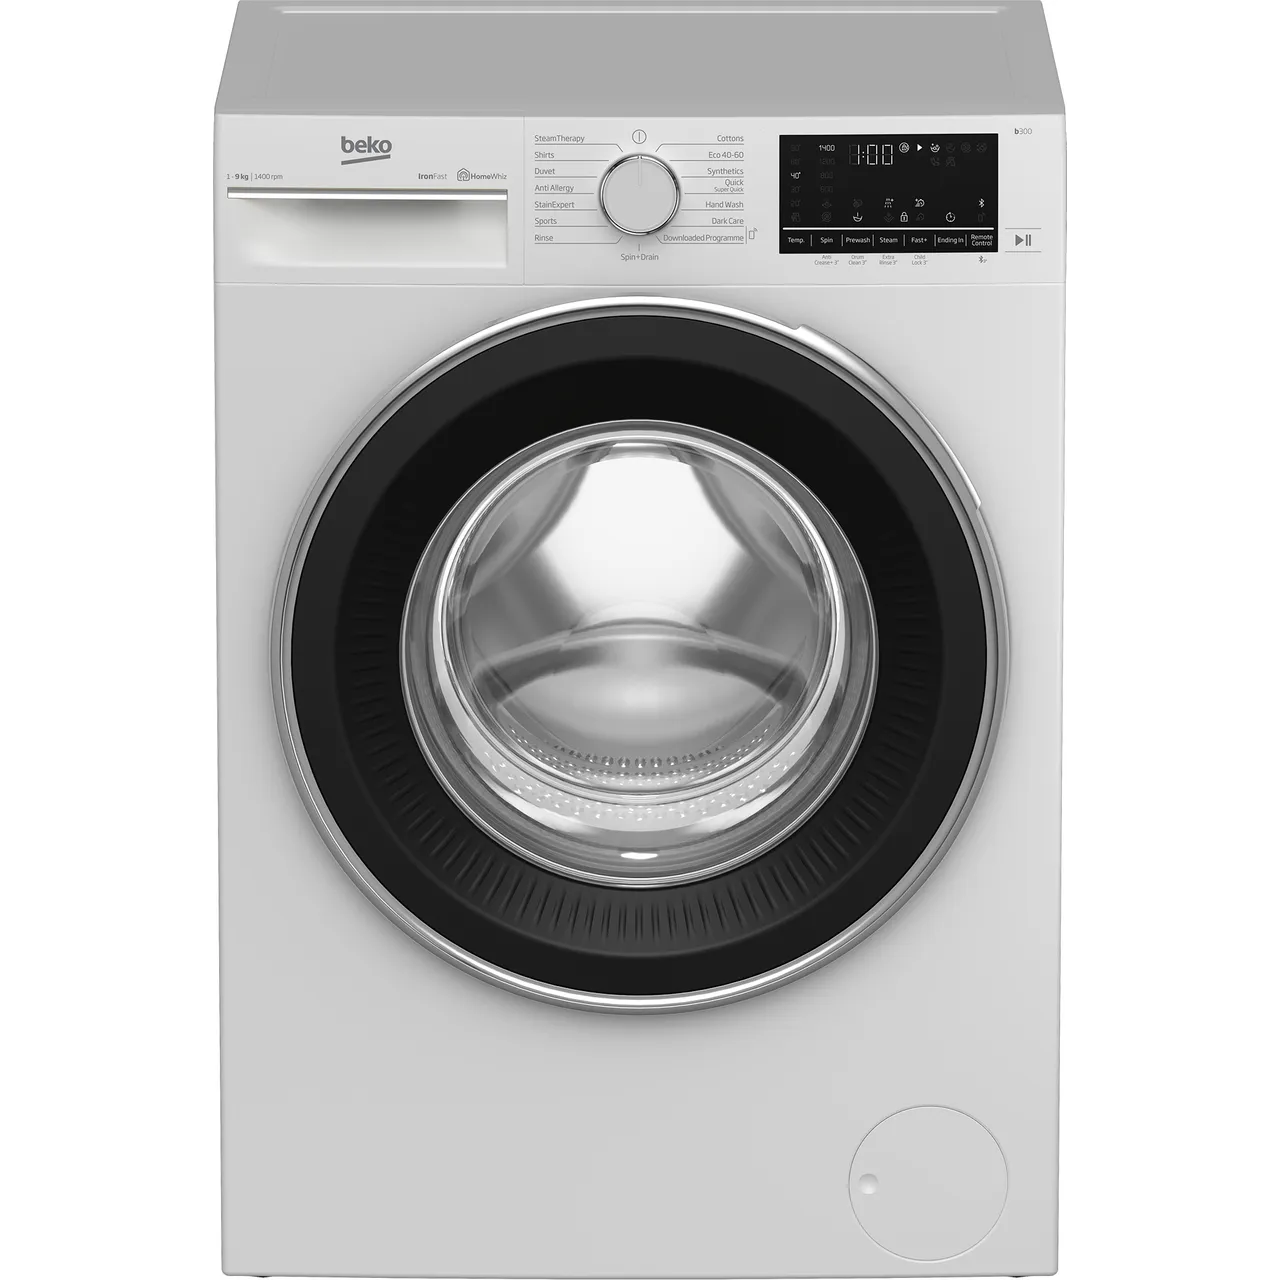 beko-9kg-washing-machine-white-1